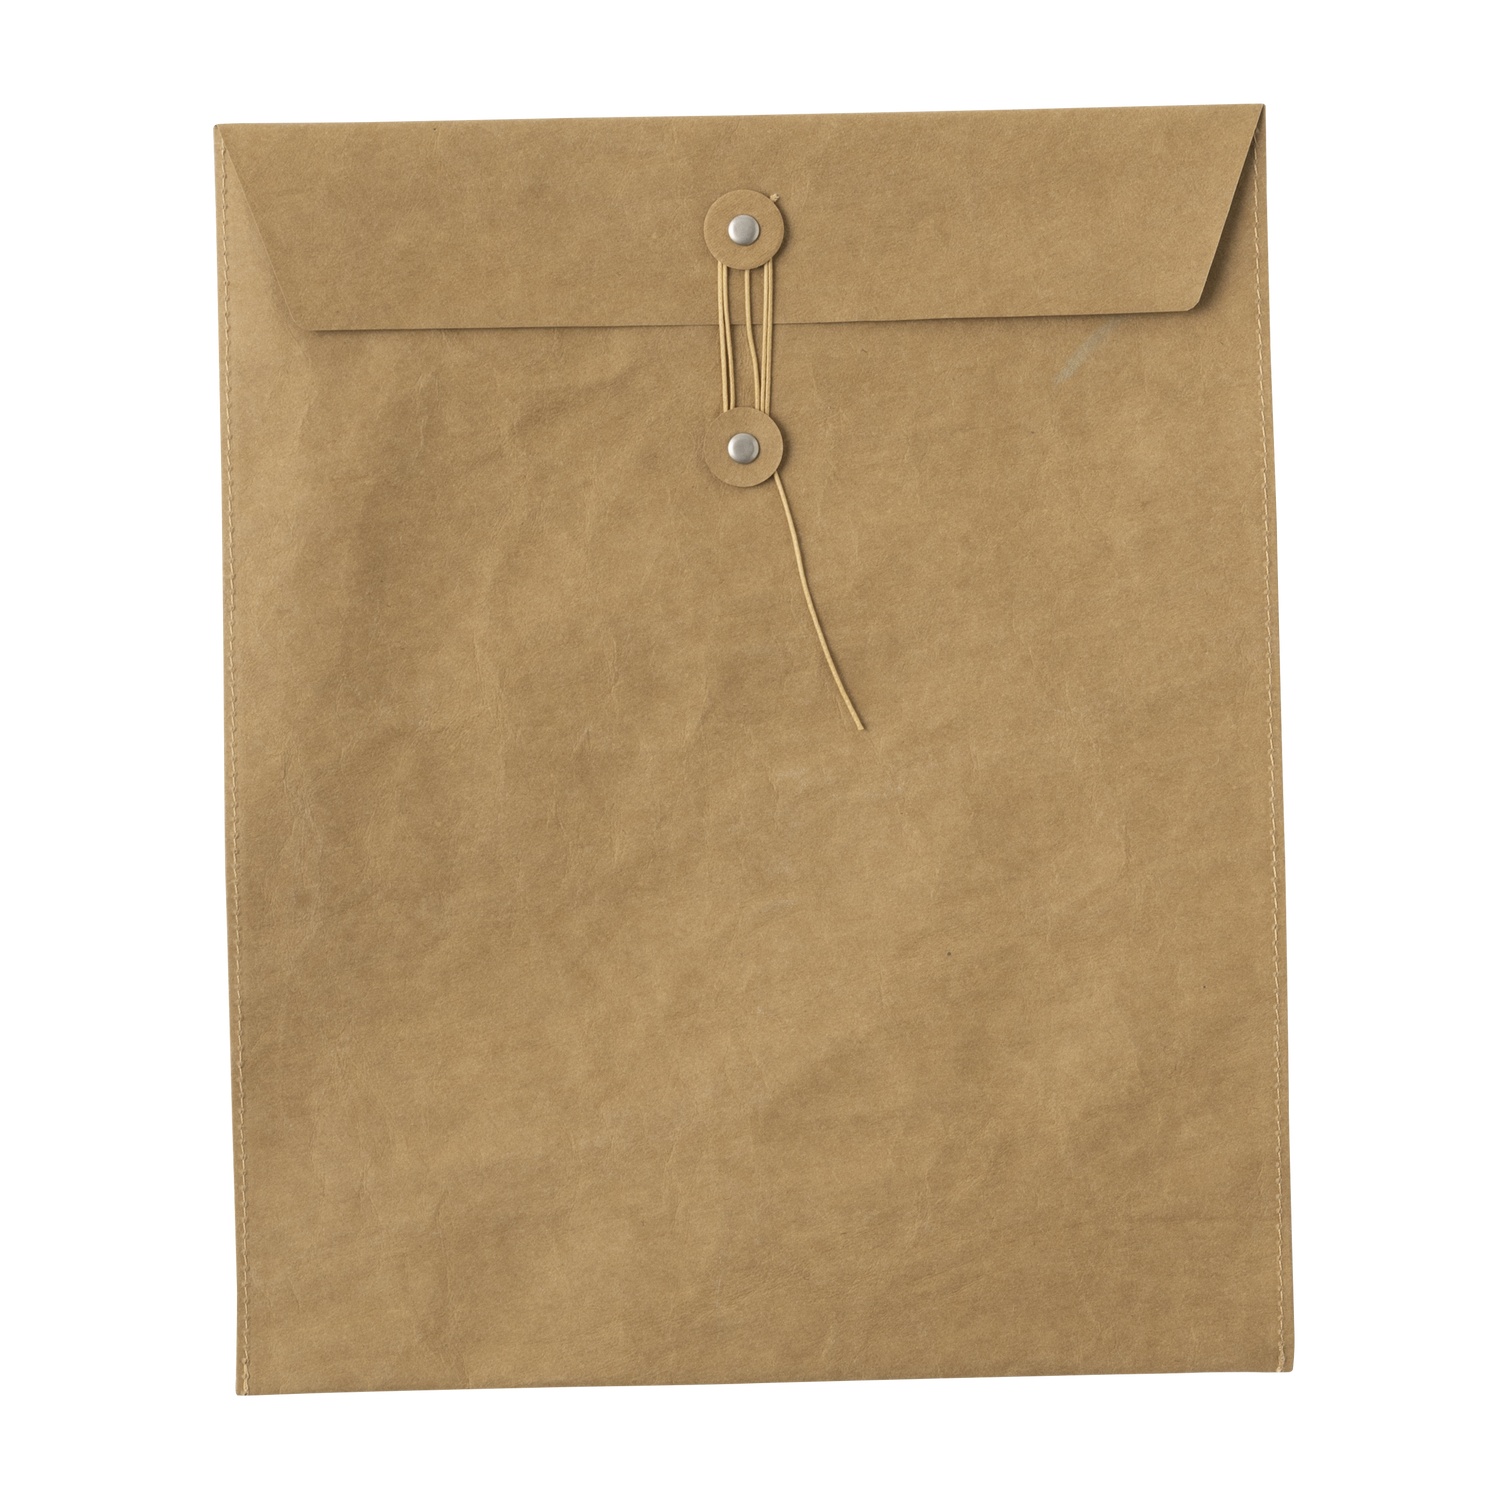 POPEYE Envelope Bag